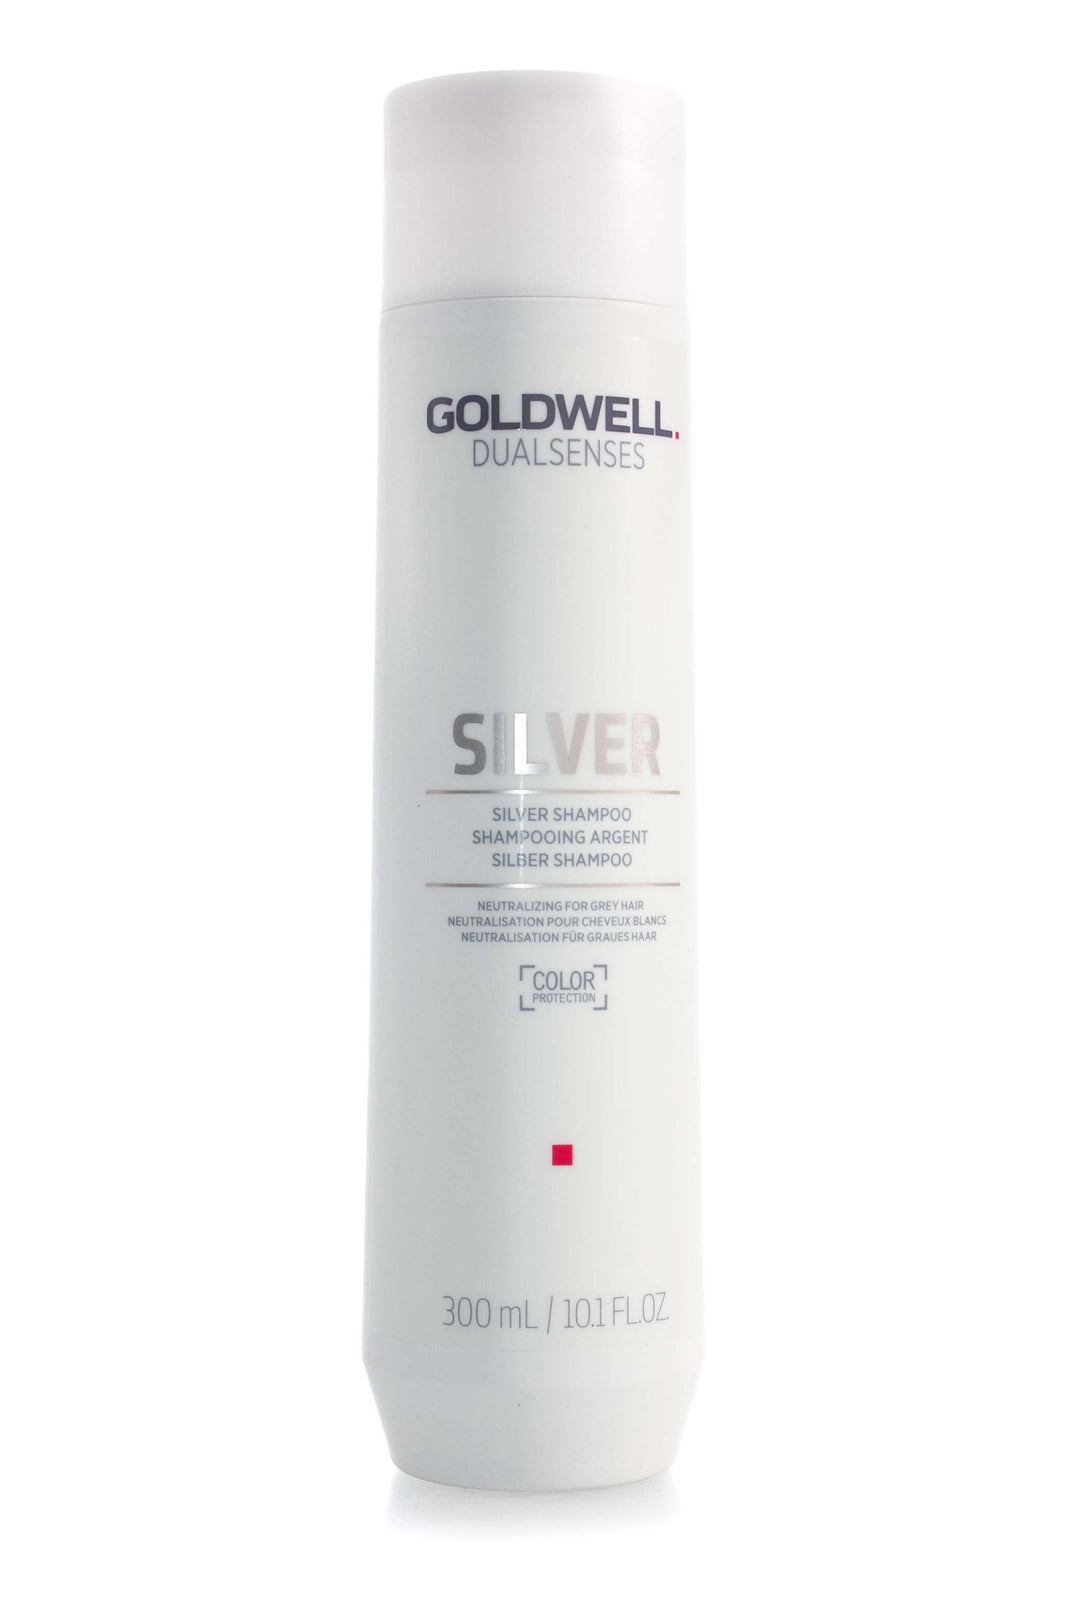 GOLDWELL Dual Senses Silver Shampoo | 300ml